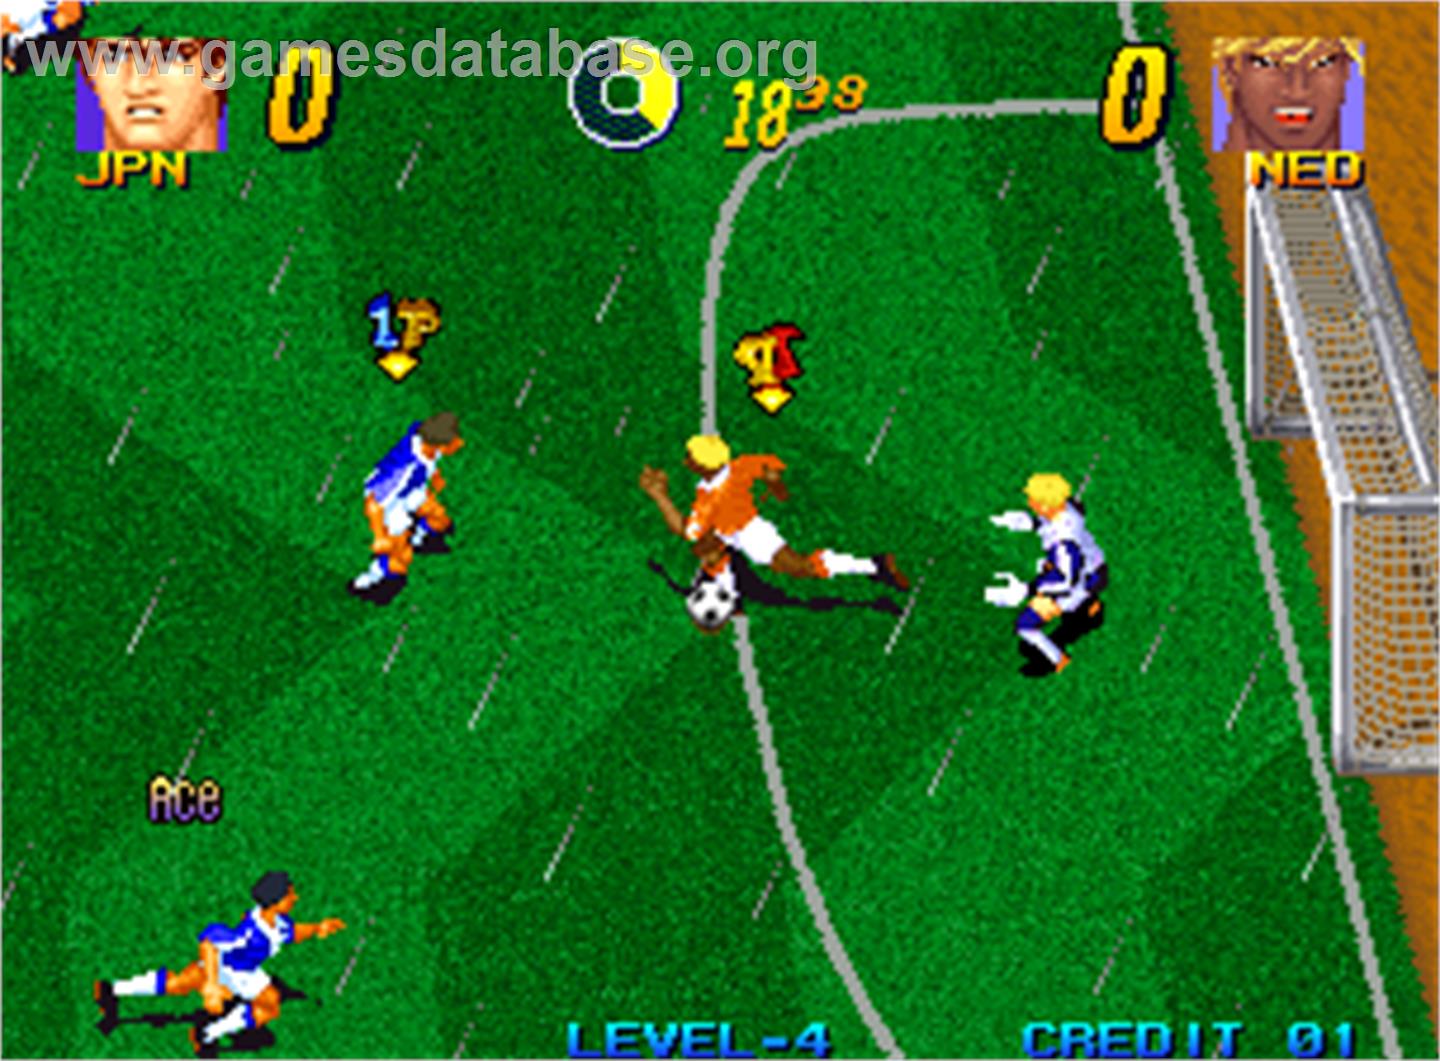 Pleasure Goal / Futsal - 5 on 5 Mini Soccer - Arcade - Artwork - In Game